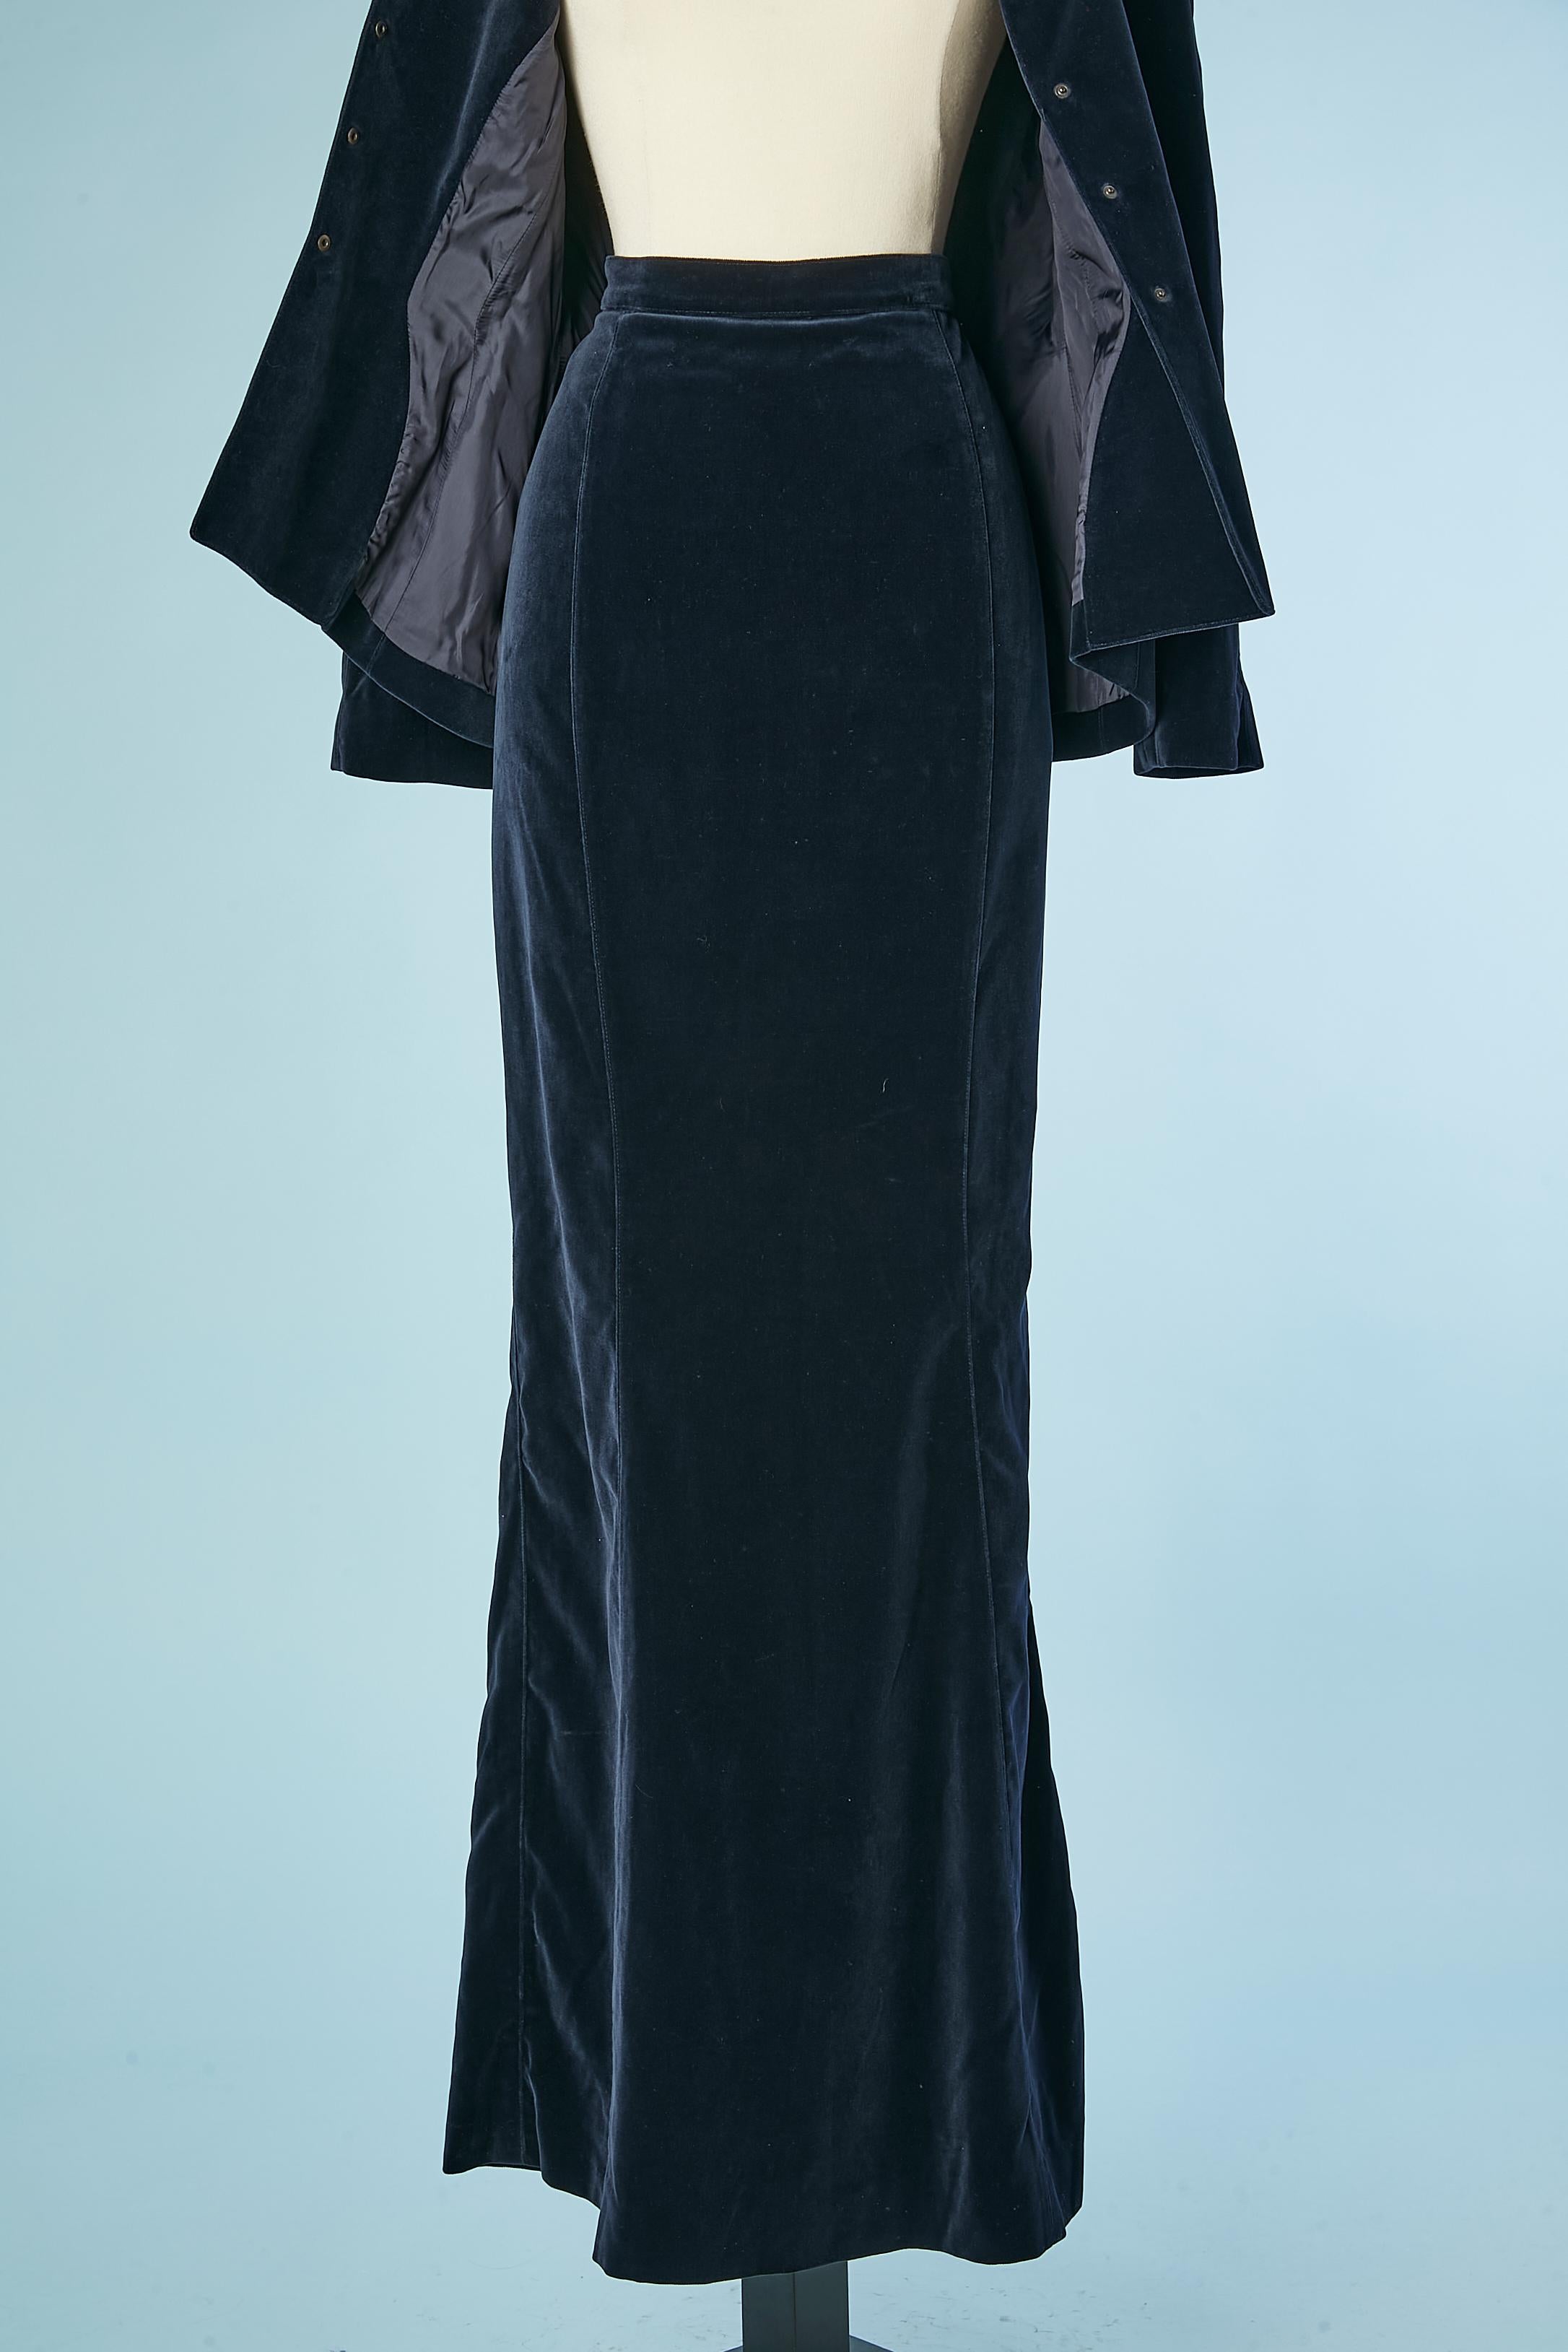 Night blue velvet skirt-suit with rhinestone embellishment Thierry Mugler  For Sale 3